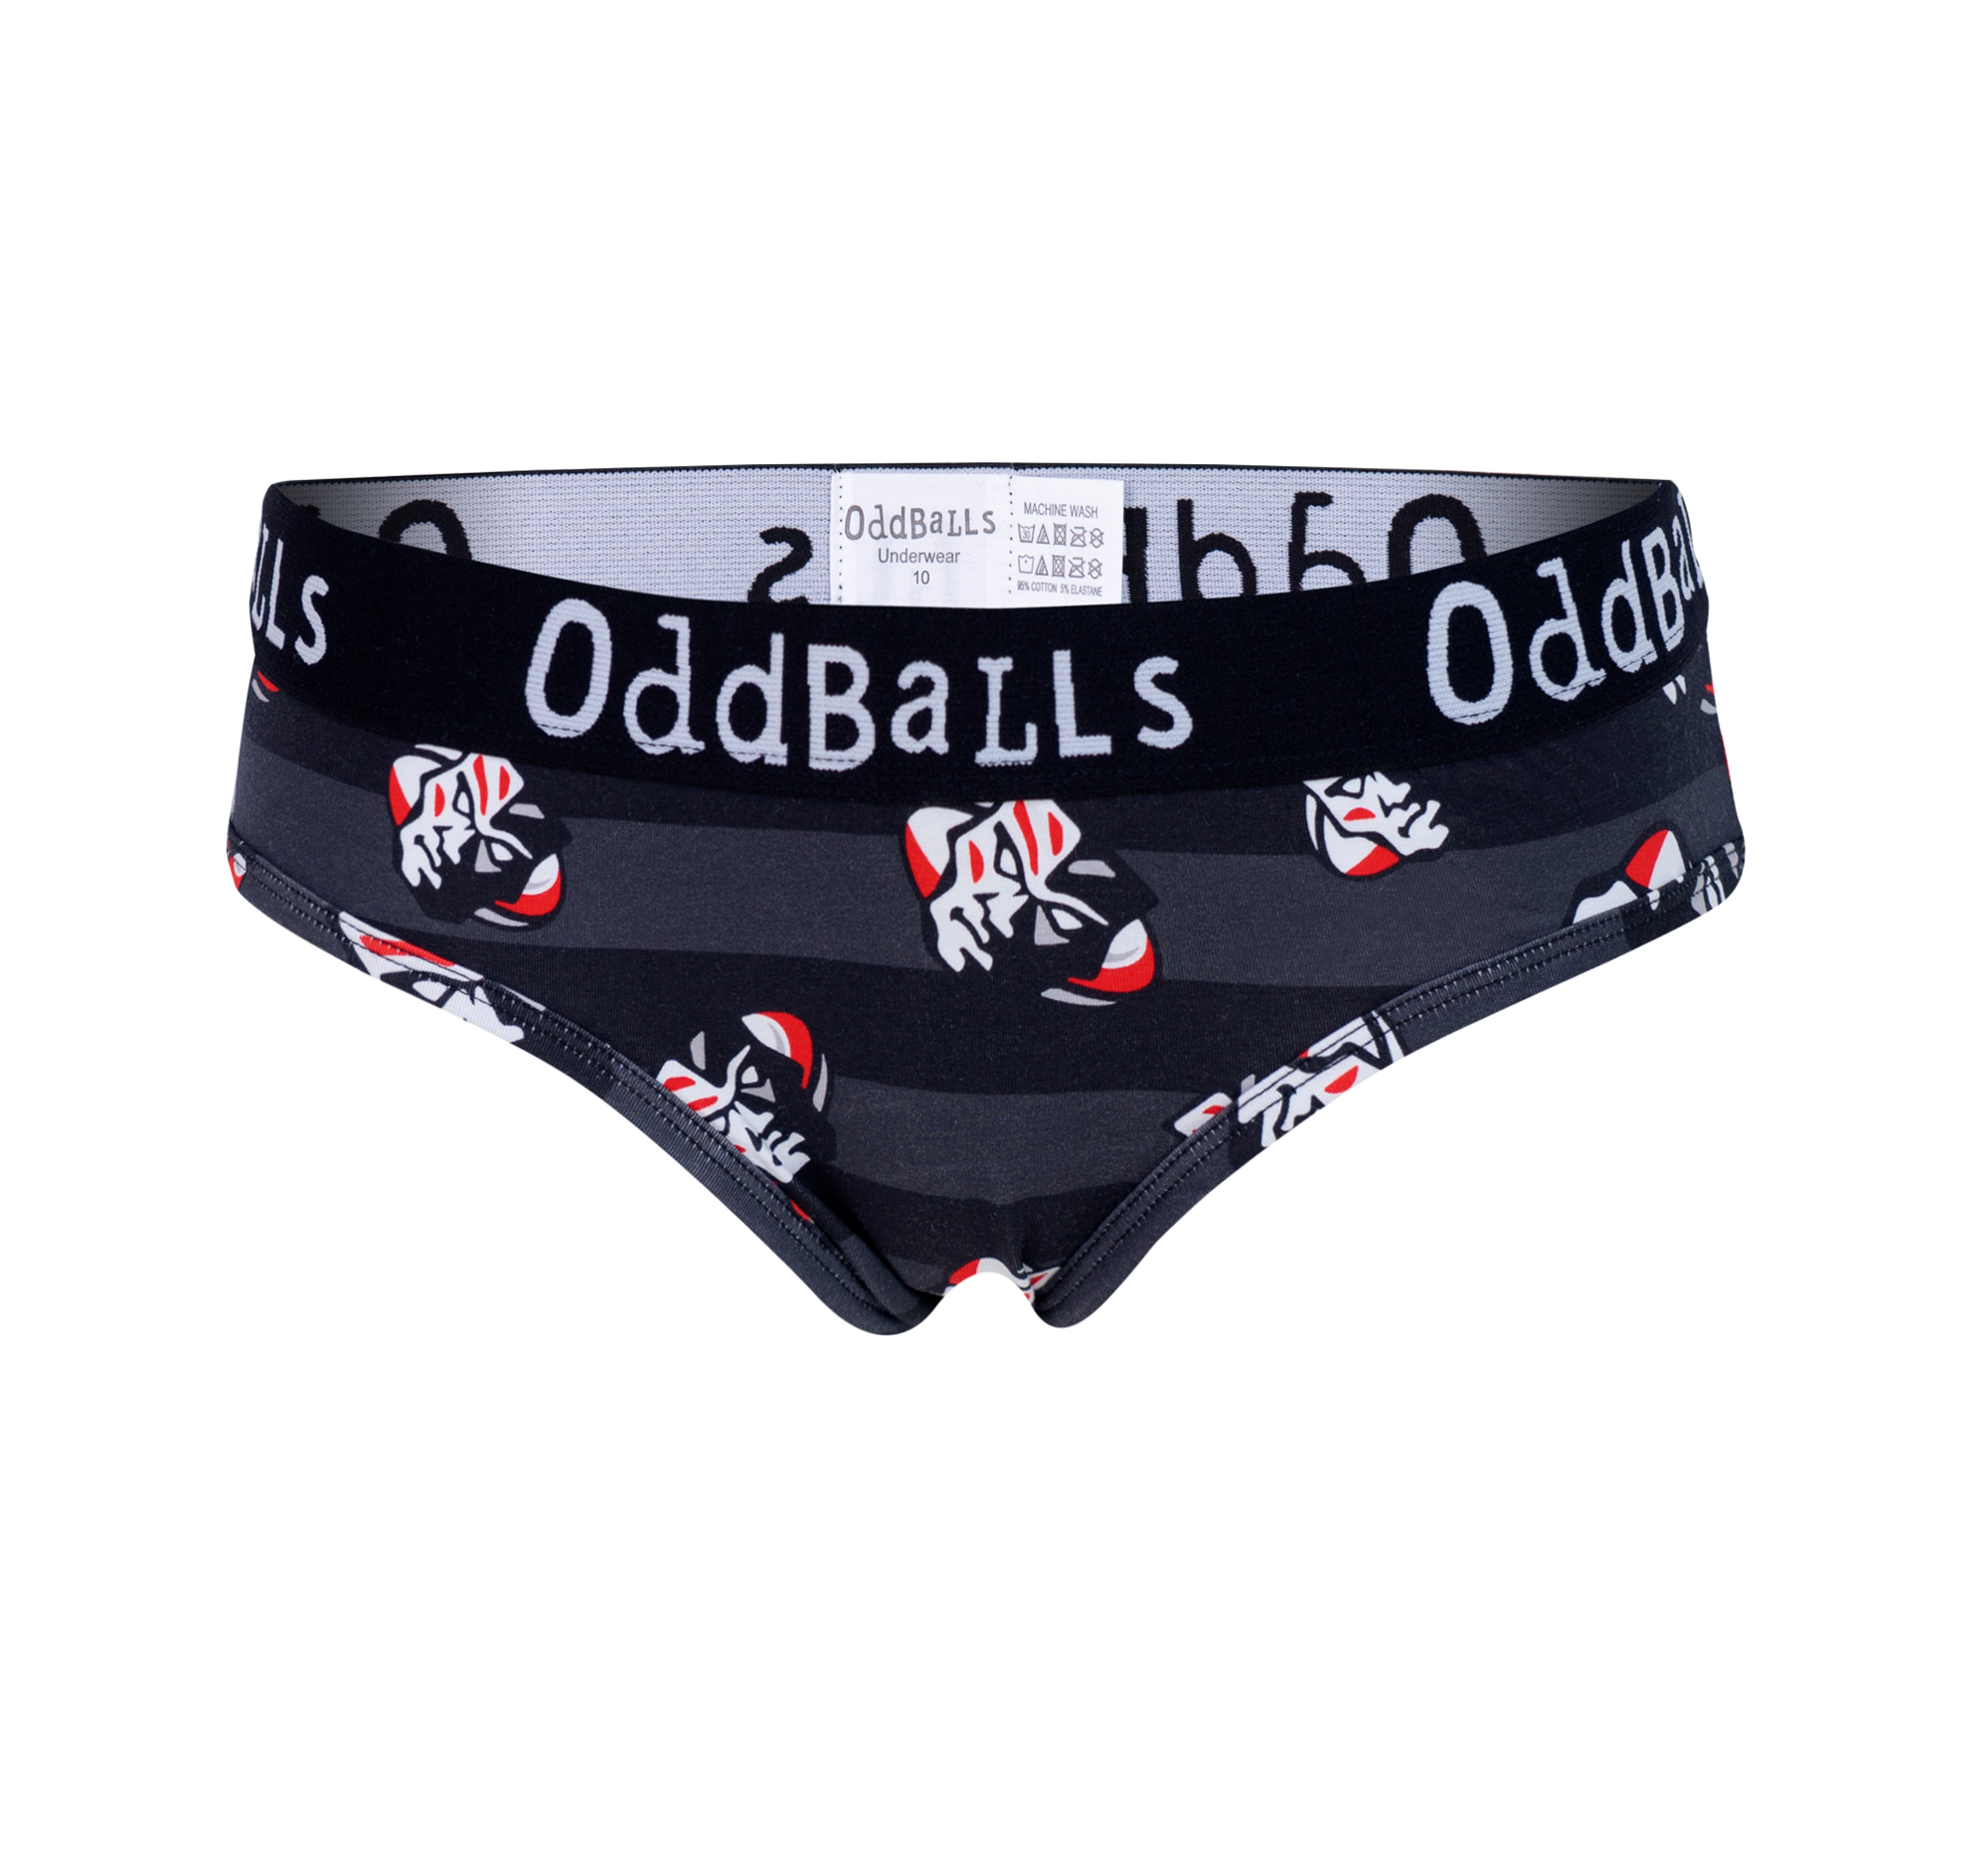 OddBalls England Alternate Rugby Boxer Shorts